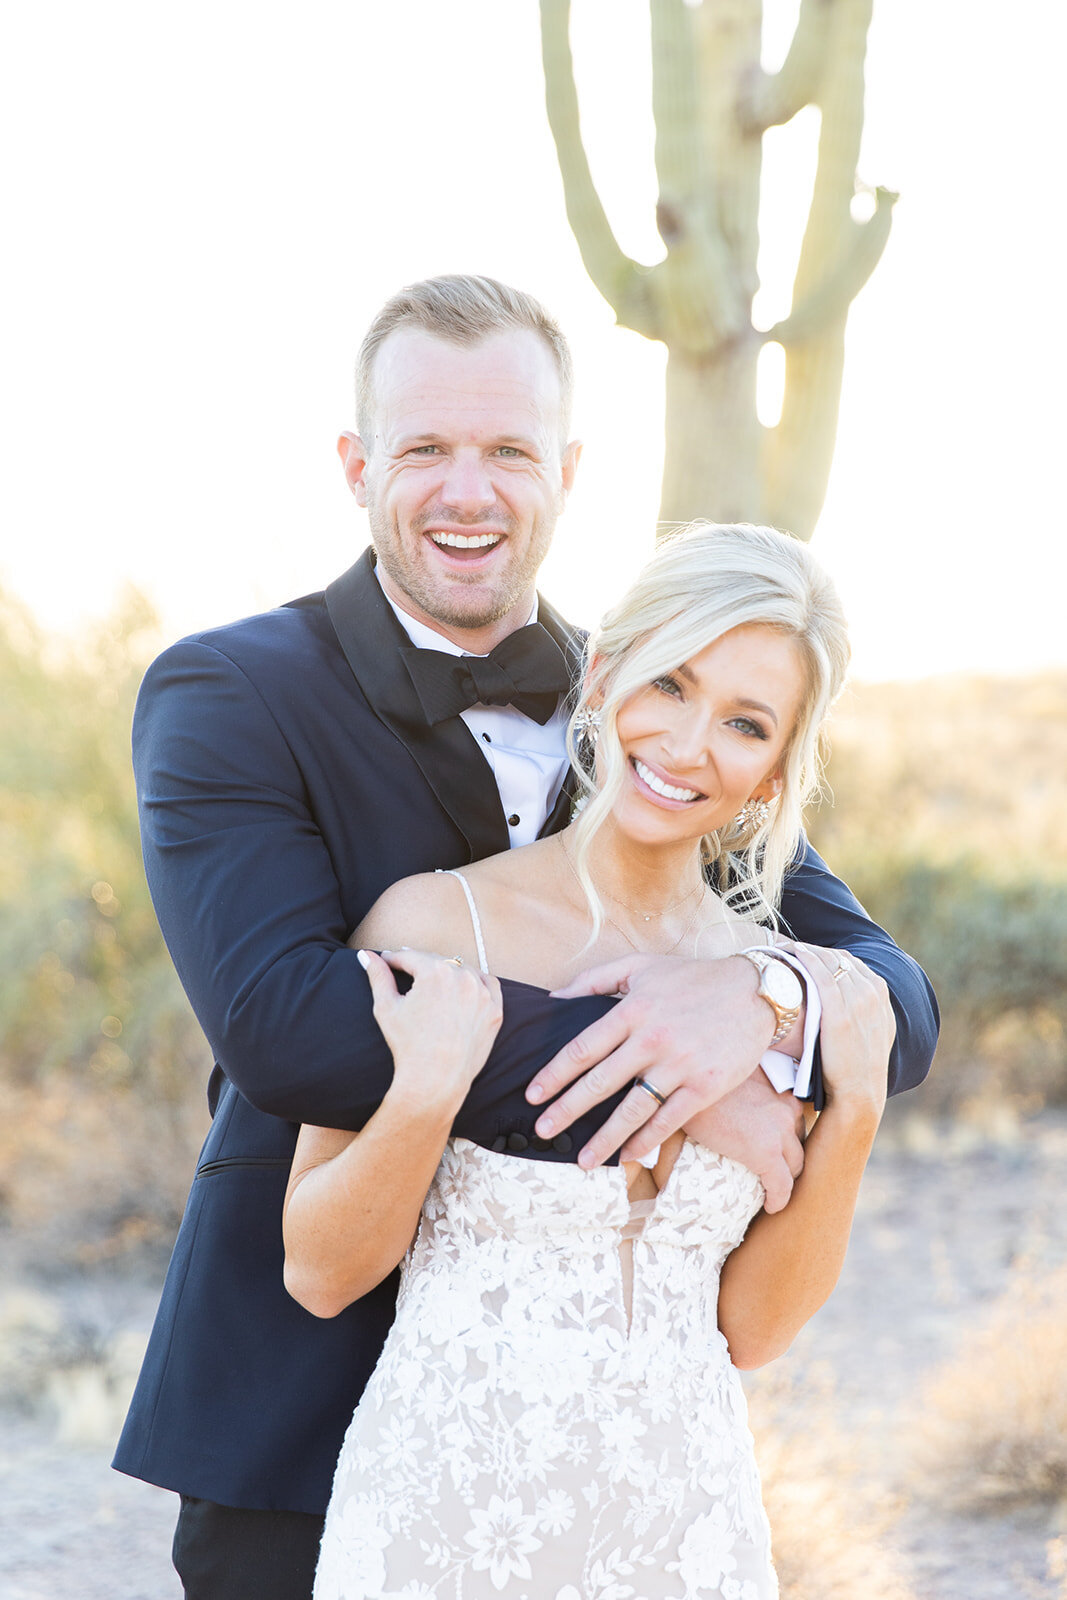 Karlie Colleen Photography - Ashley & Grant Wedding - The Paseo - Phoenix Arizona-791